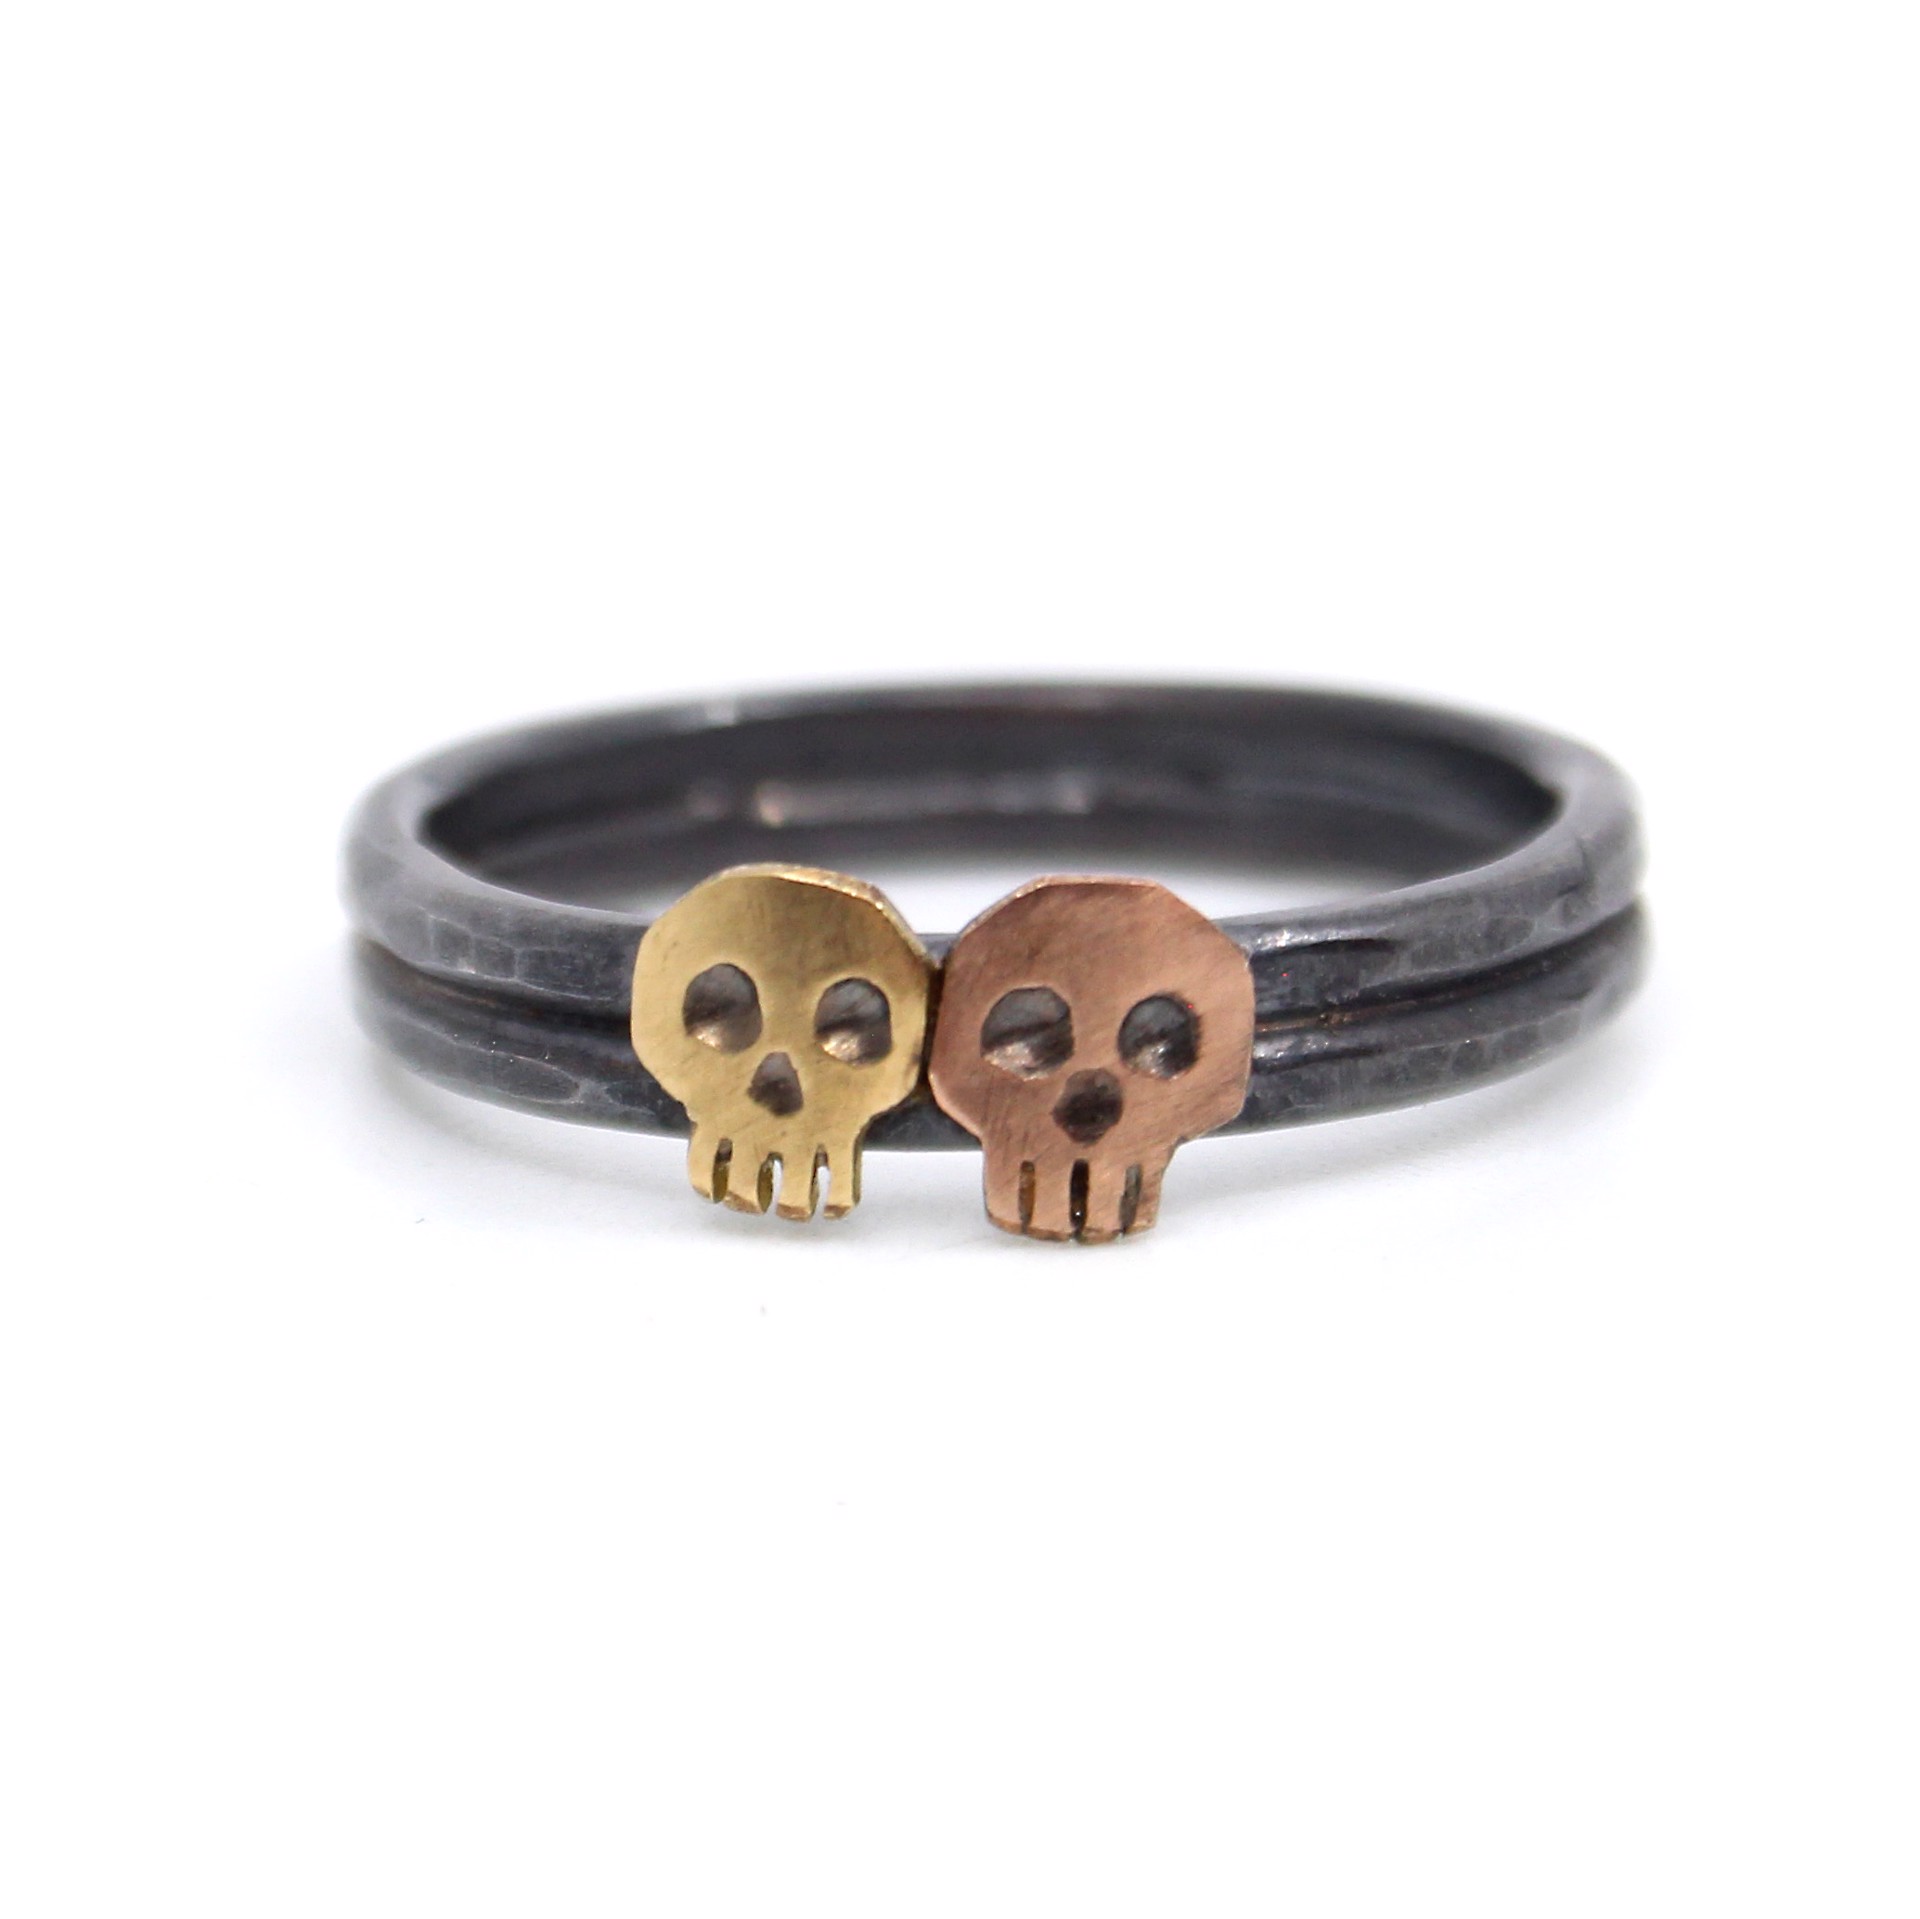 Skull Buddies Ring (Size 7.5) by Susan Elnora